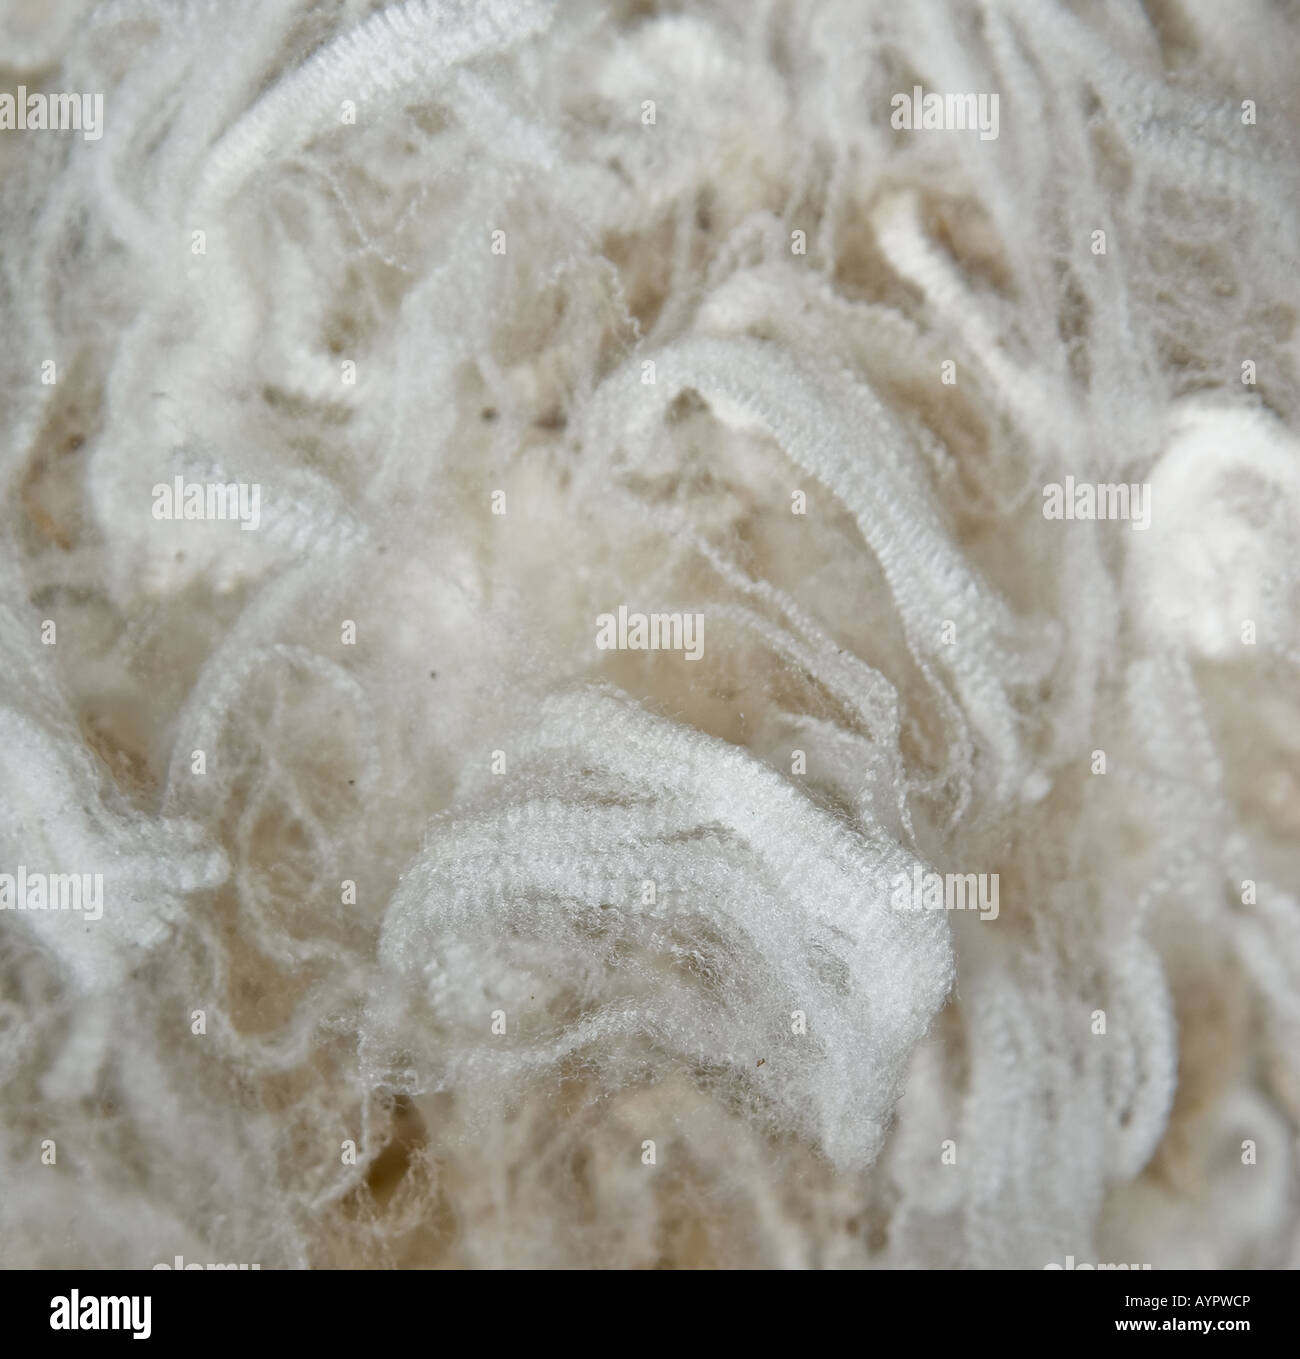 prize winning superfine merino wool as a background image Stock Photo